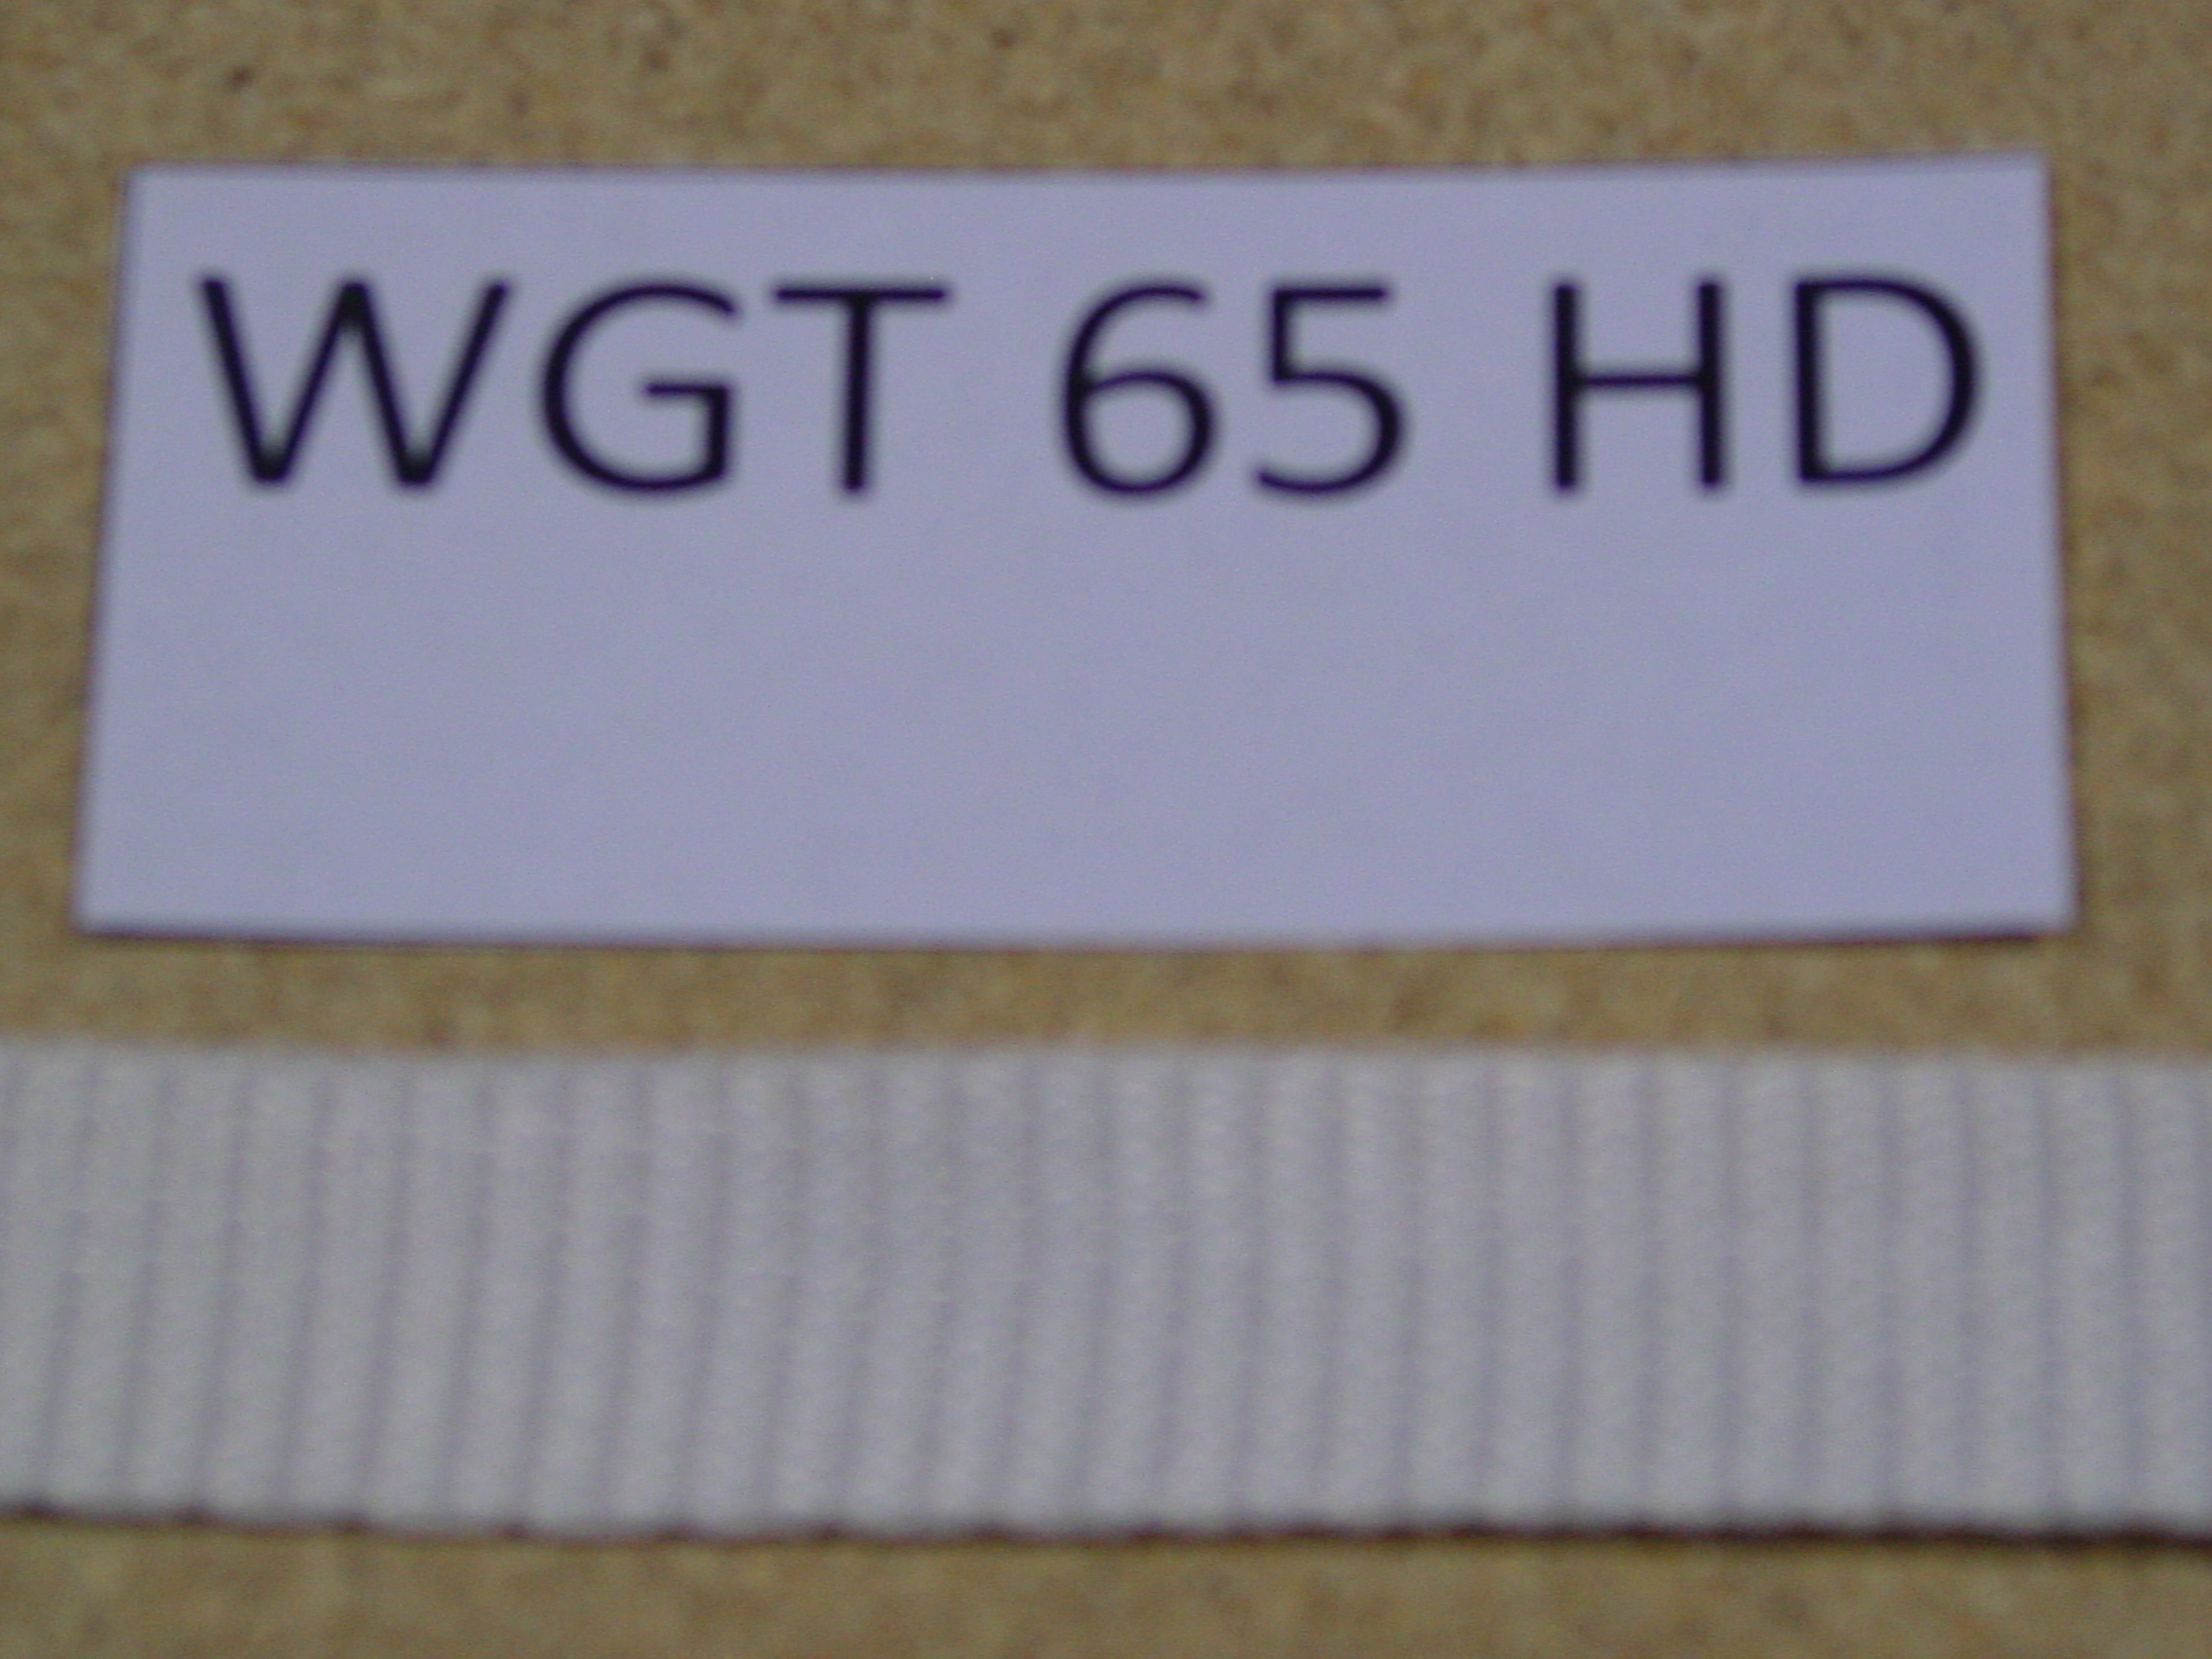 1 Rôle umreifungsband textile 19 mm 600 M 550 kg bande Textilband noyau 76 mm